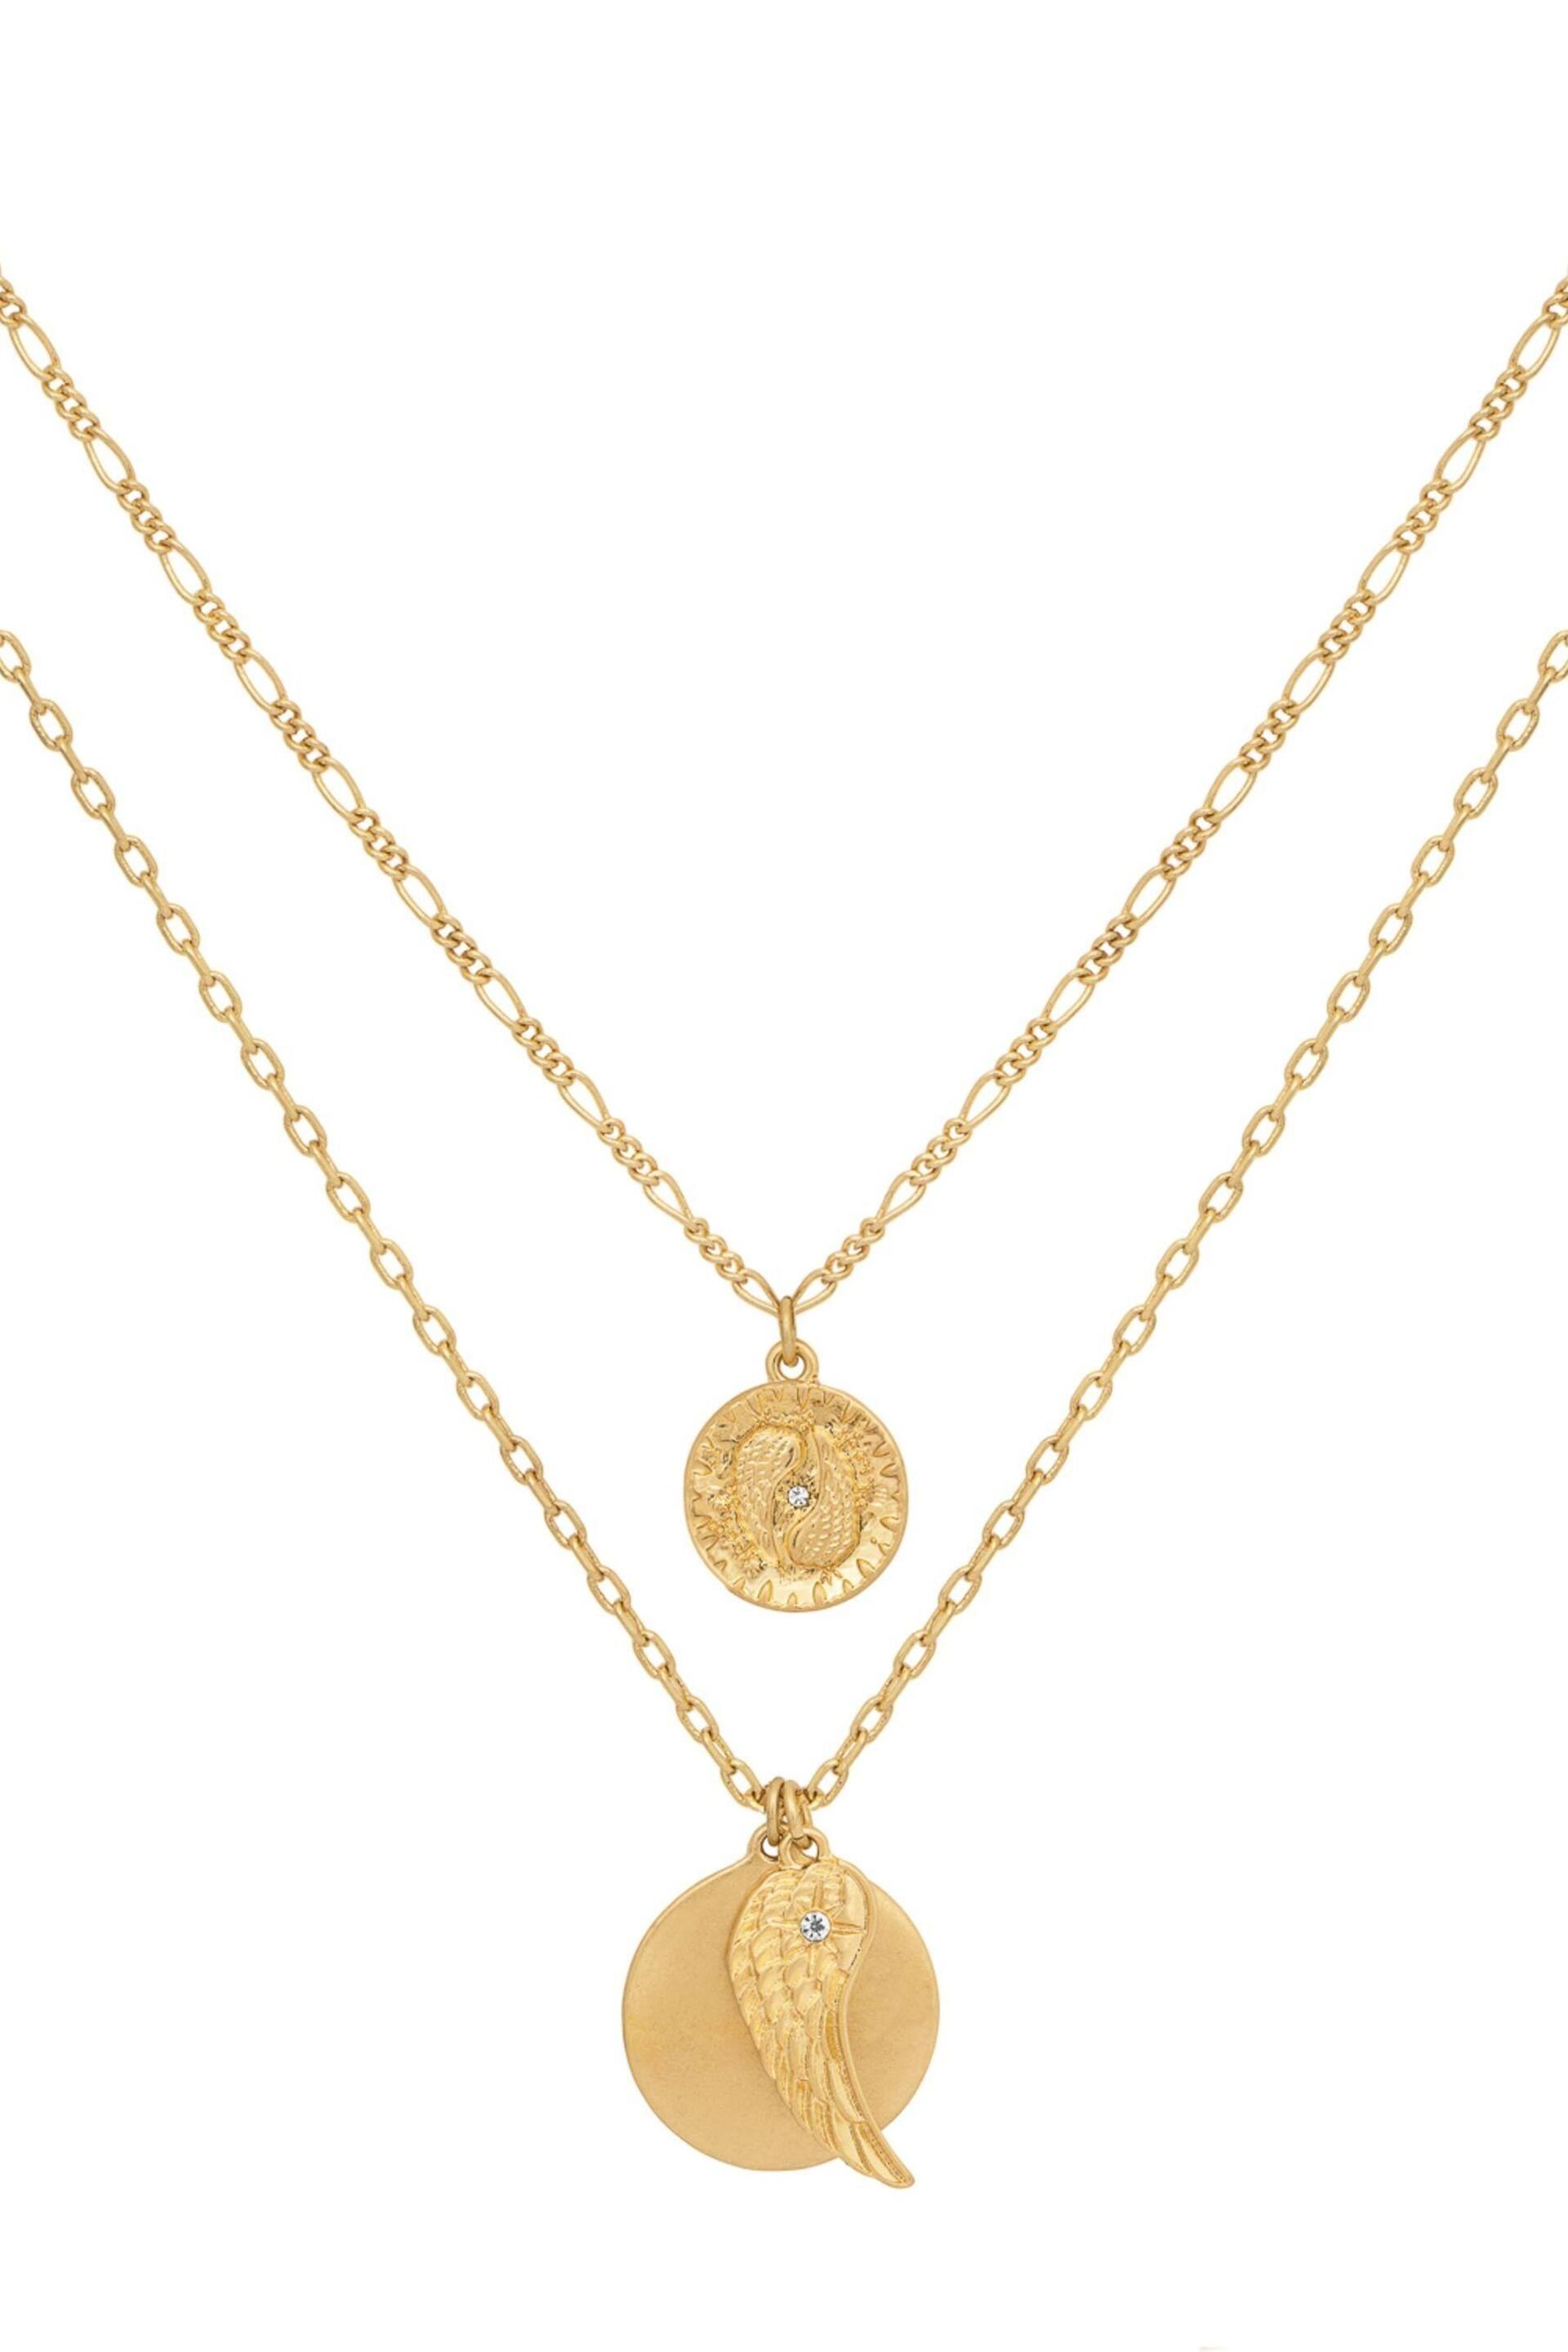 Bibi Bijoux Gold Tone Serenity Layered Charm Necklace - Image 2 of 5